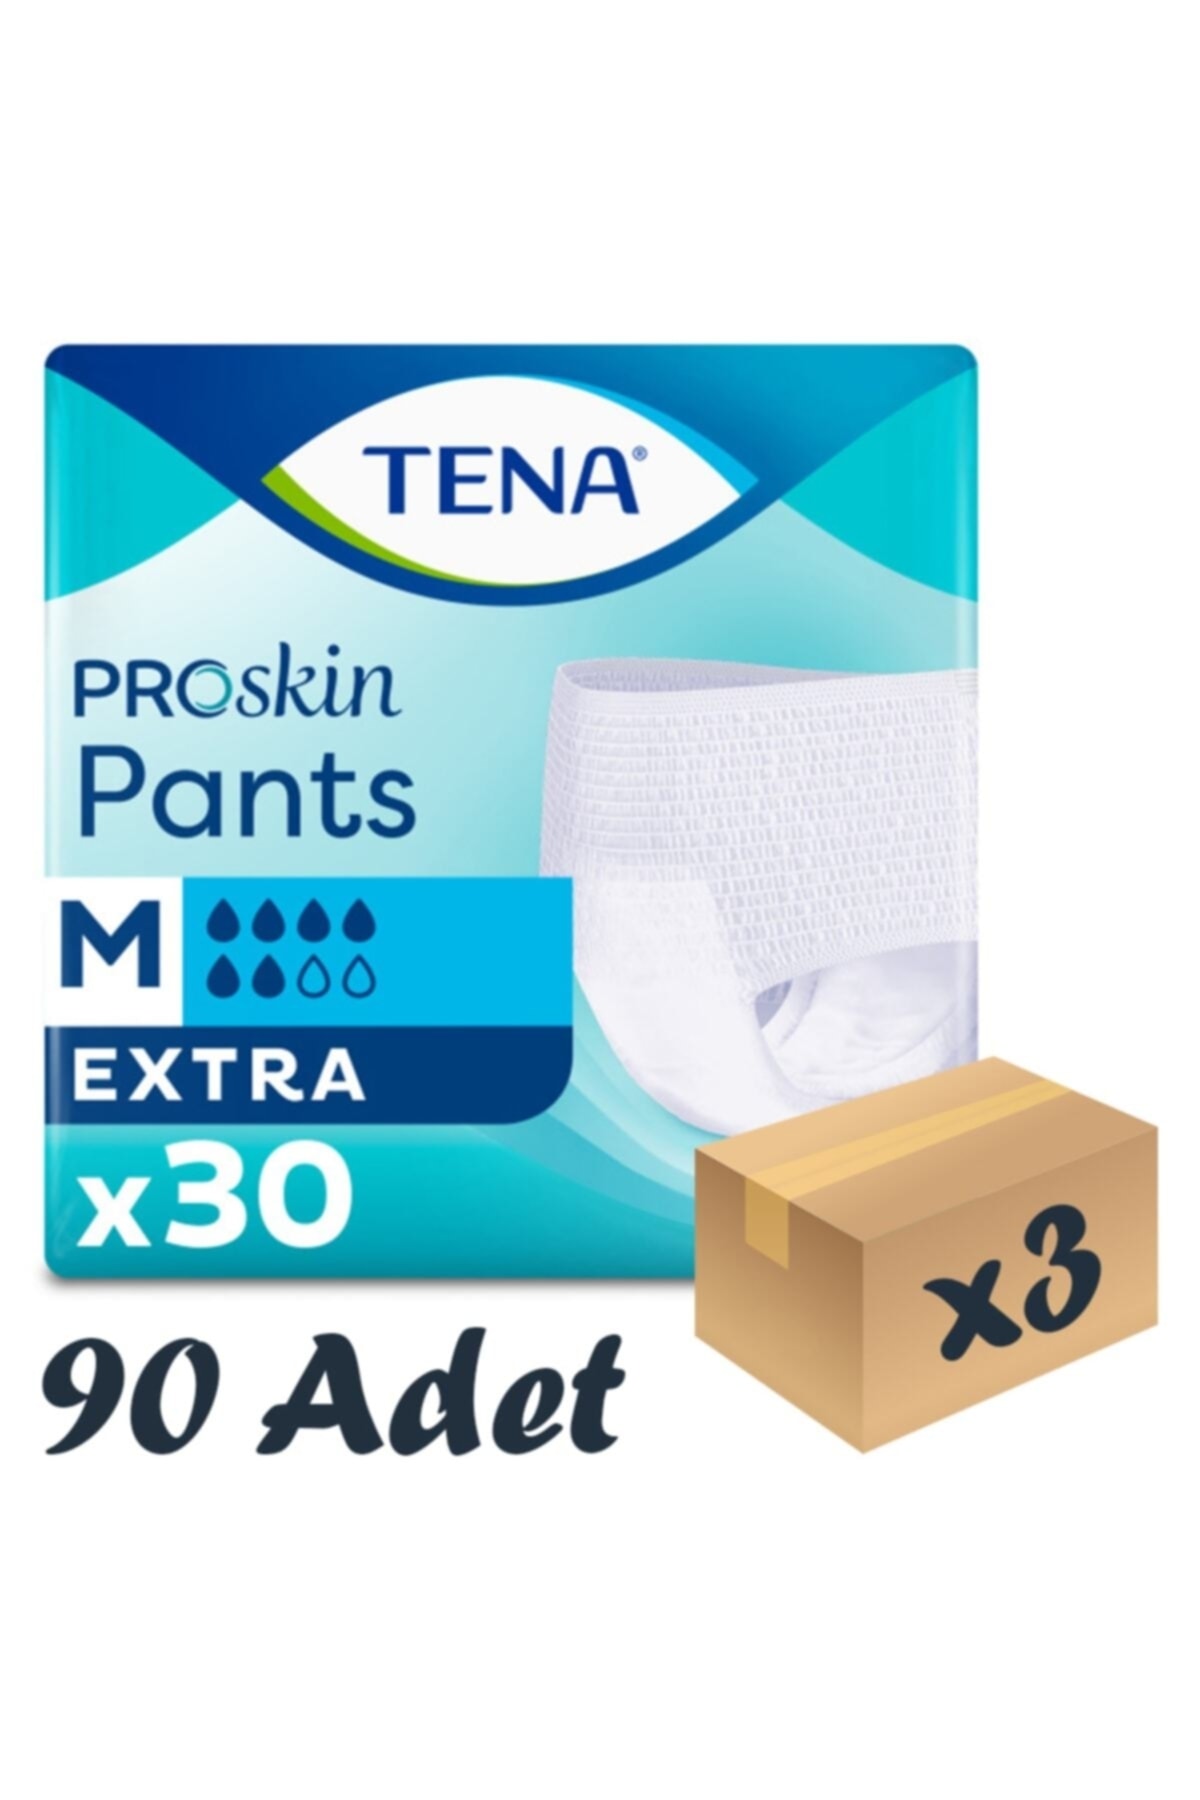 TENA Proskin Pants Extra Emici Külot Orta Boy m 6 Damla 30'lu 3 Paket 90 Adet